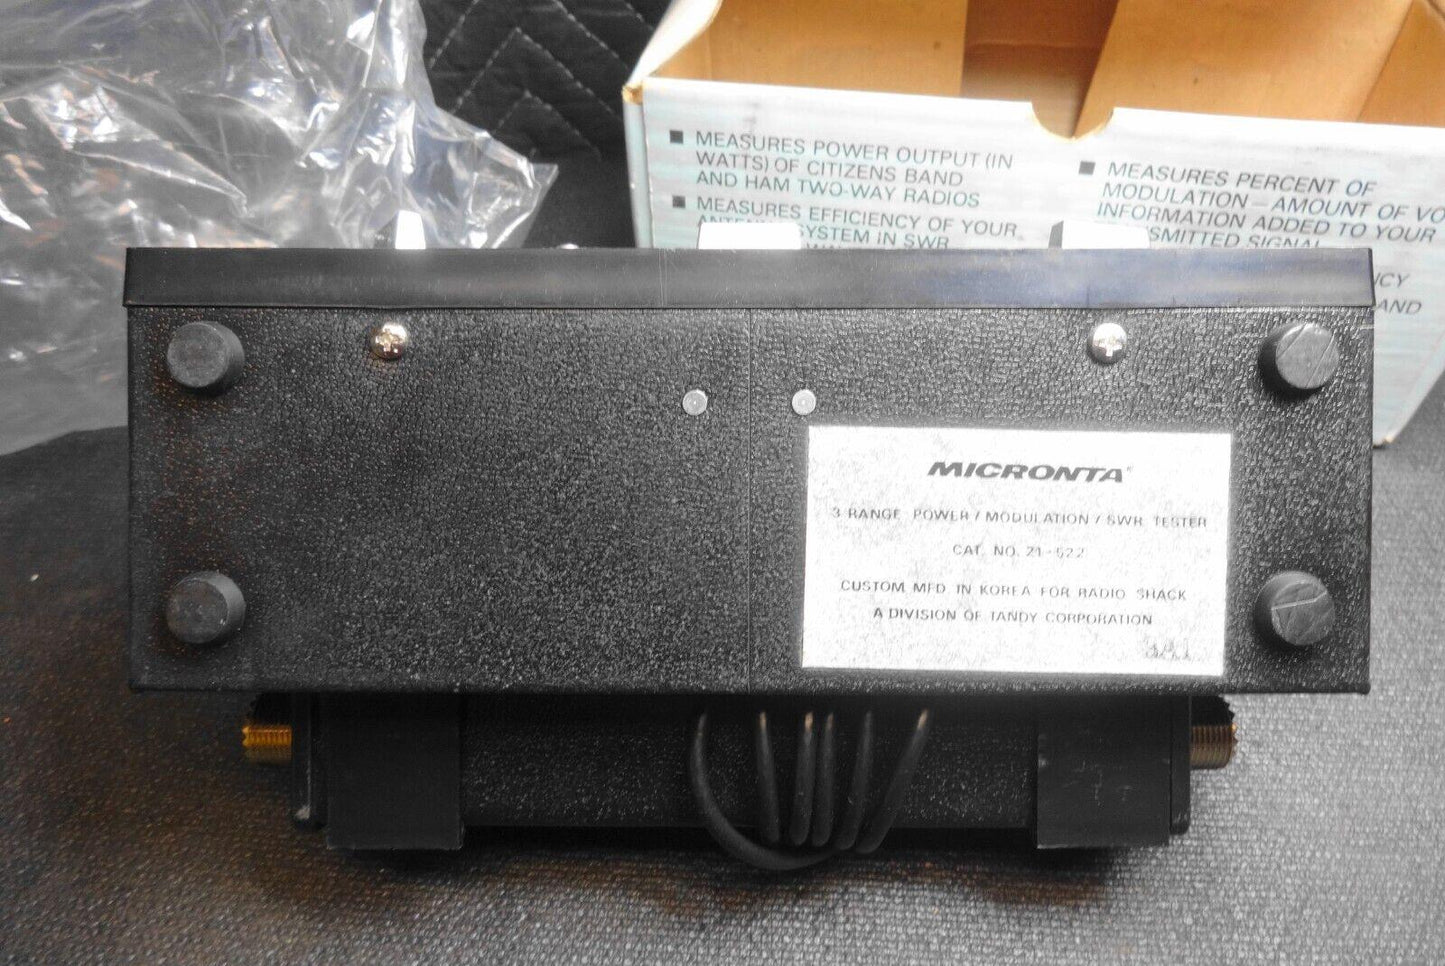 Micronta 21-522 3 Range Power 5, 50, 500 watt, Modulation and SWR Tester w/ Box